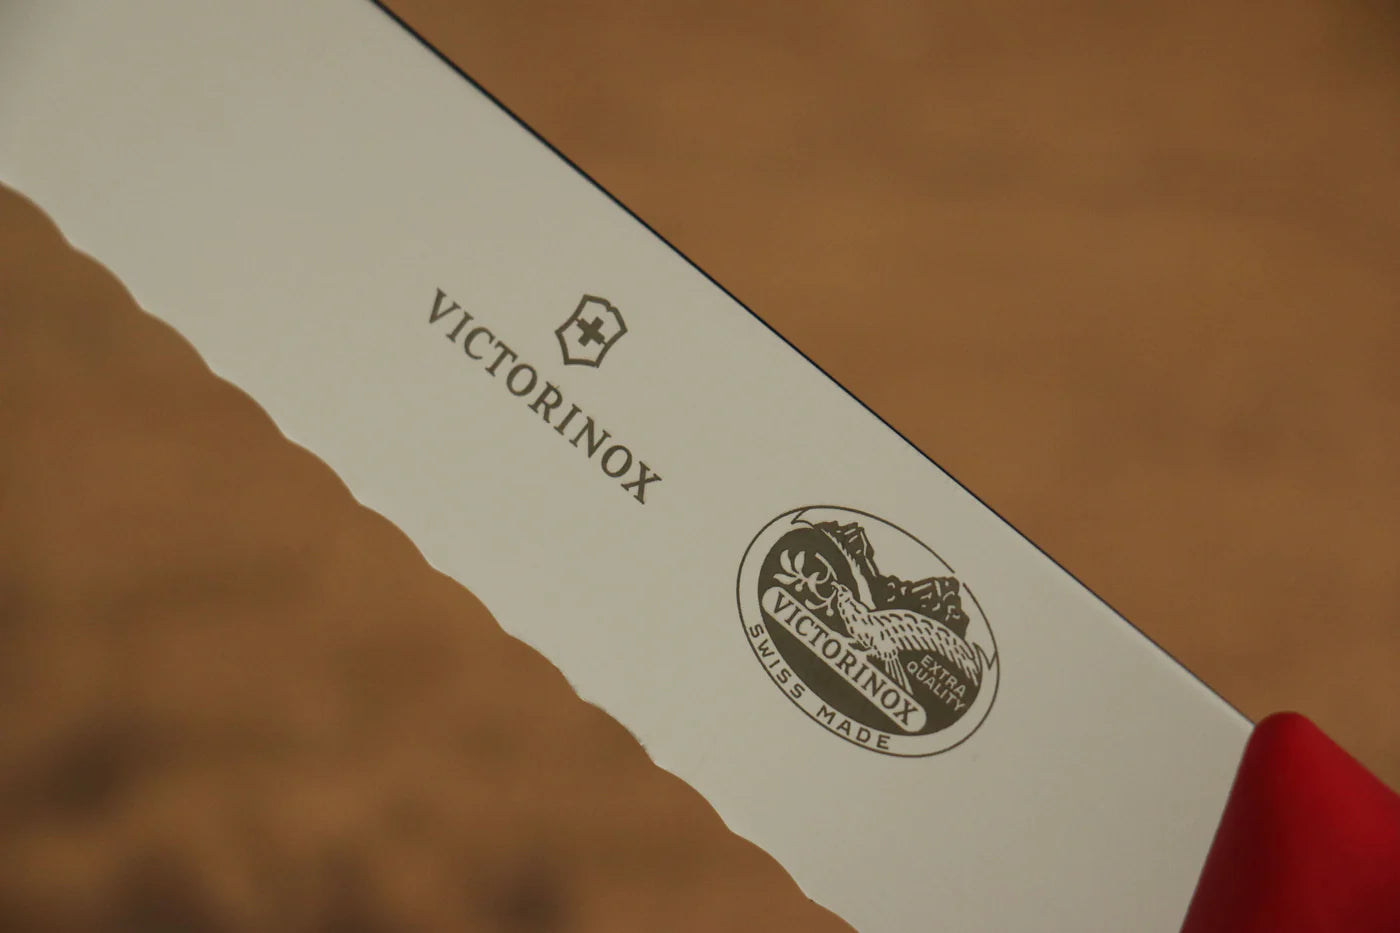 VICTORINOX Stainless Steel Wave Knife 250mm Plastic Handle VICTORINOX ステンレス鋼 ウェーブナイフ 250mm プラスチック柄 Free ship - Dao Sóng Thép Không Gỉ VICTORINOX Dao Nhật Bản Tay Cầm Bằng Nhựa 250mm